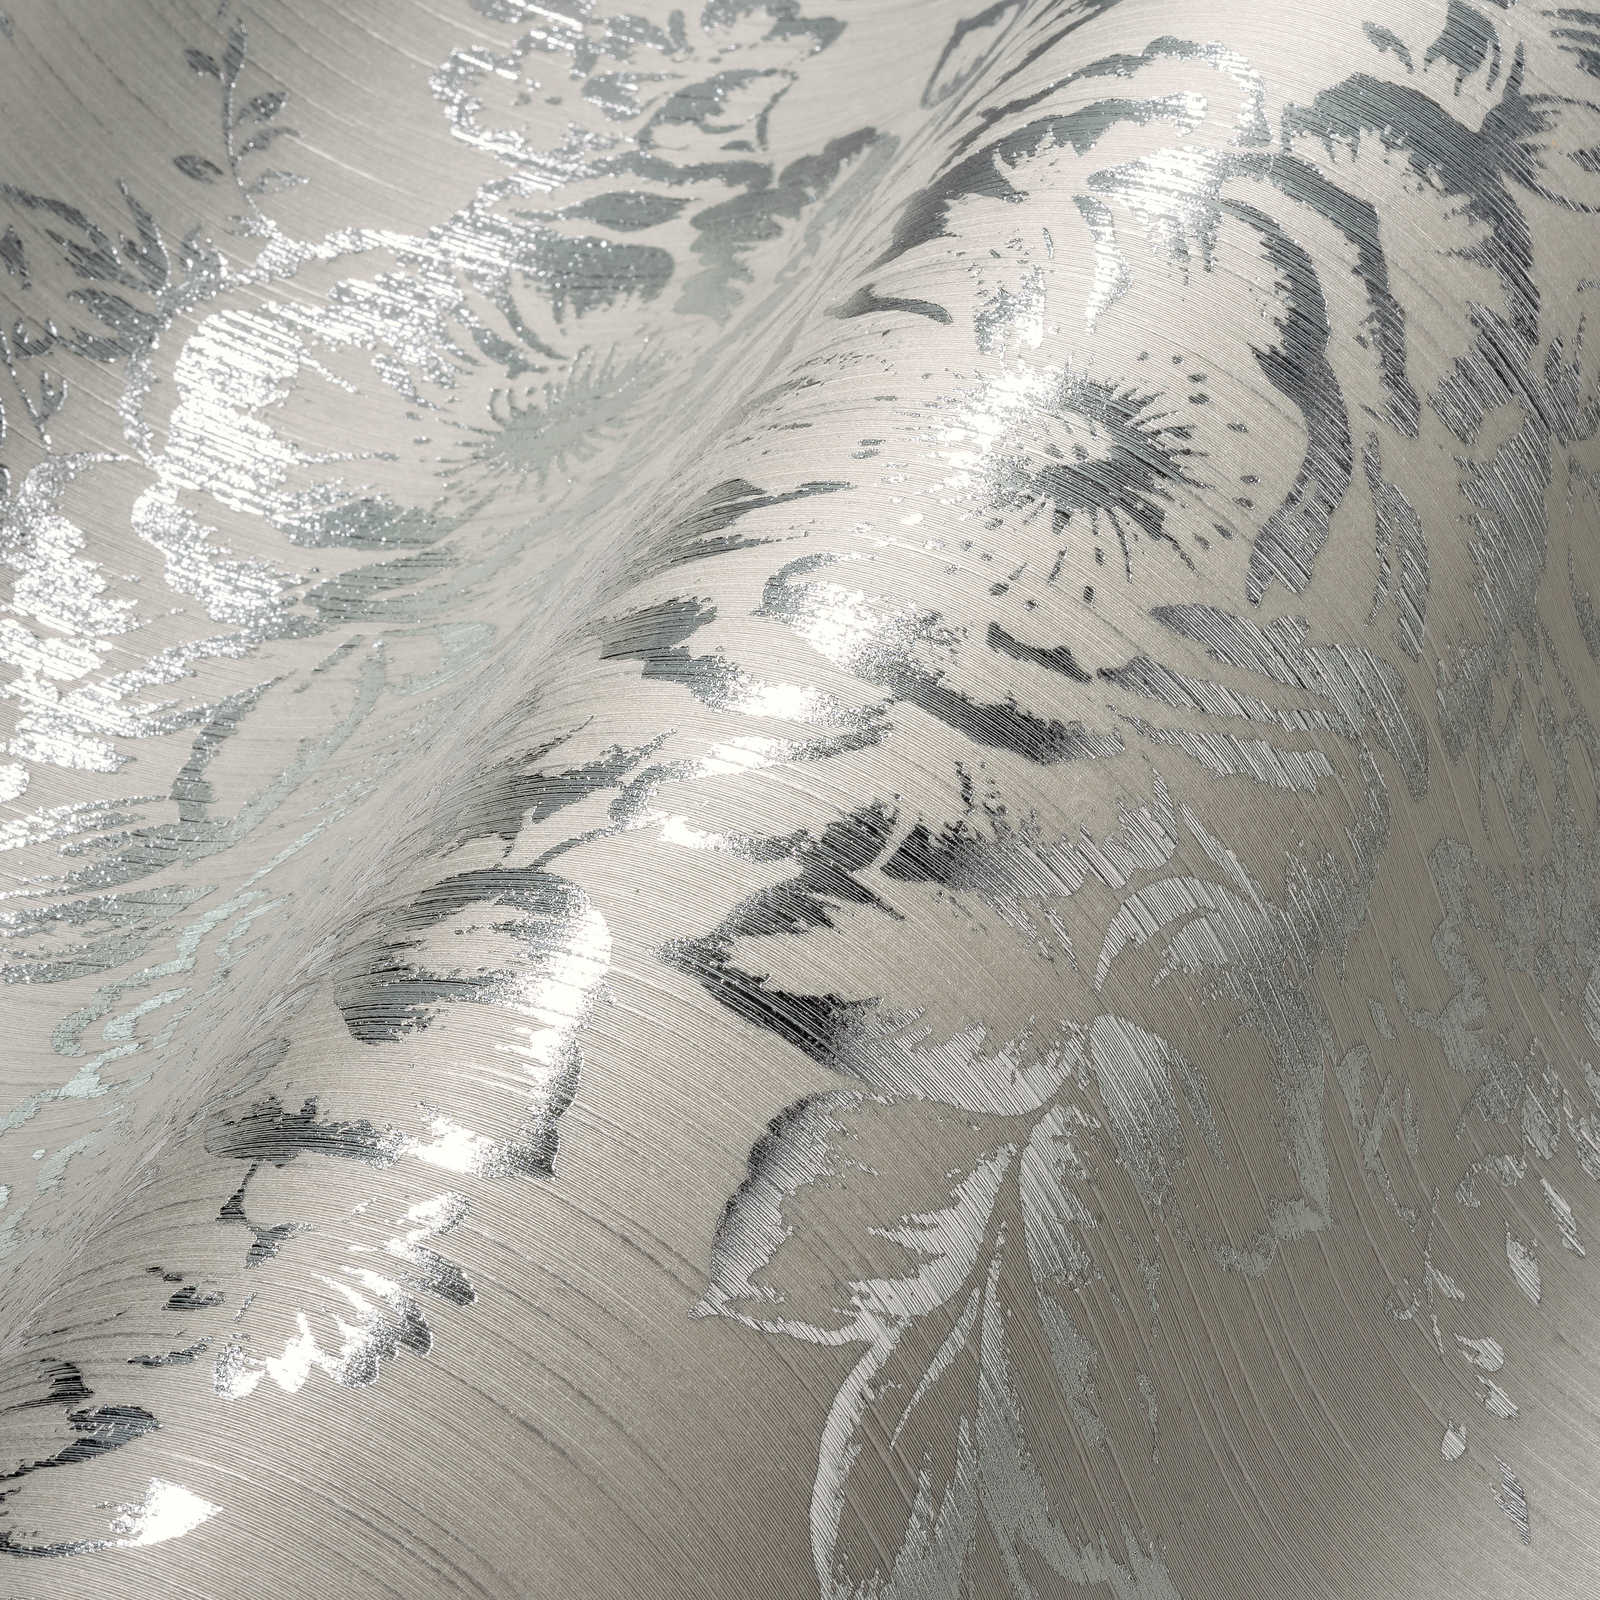             Papel pintado texturizado con motivos florales plateados - plata, gris
        